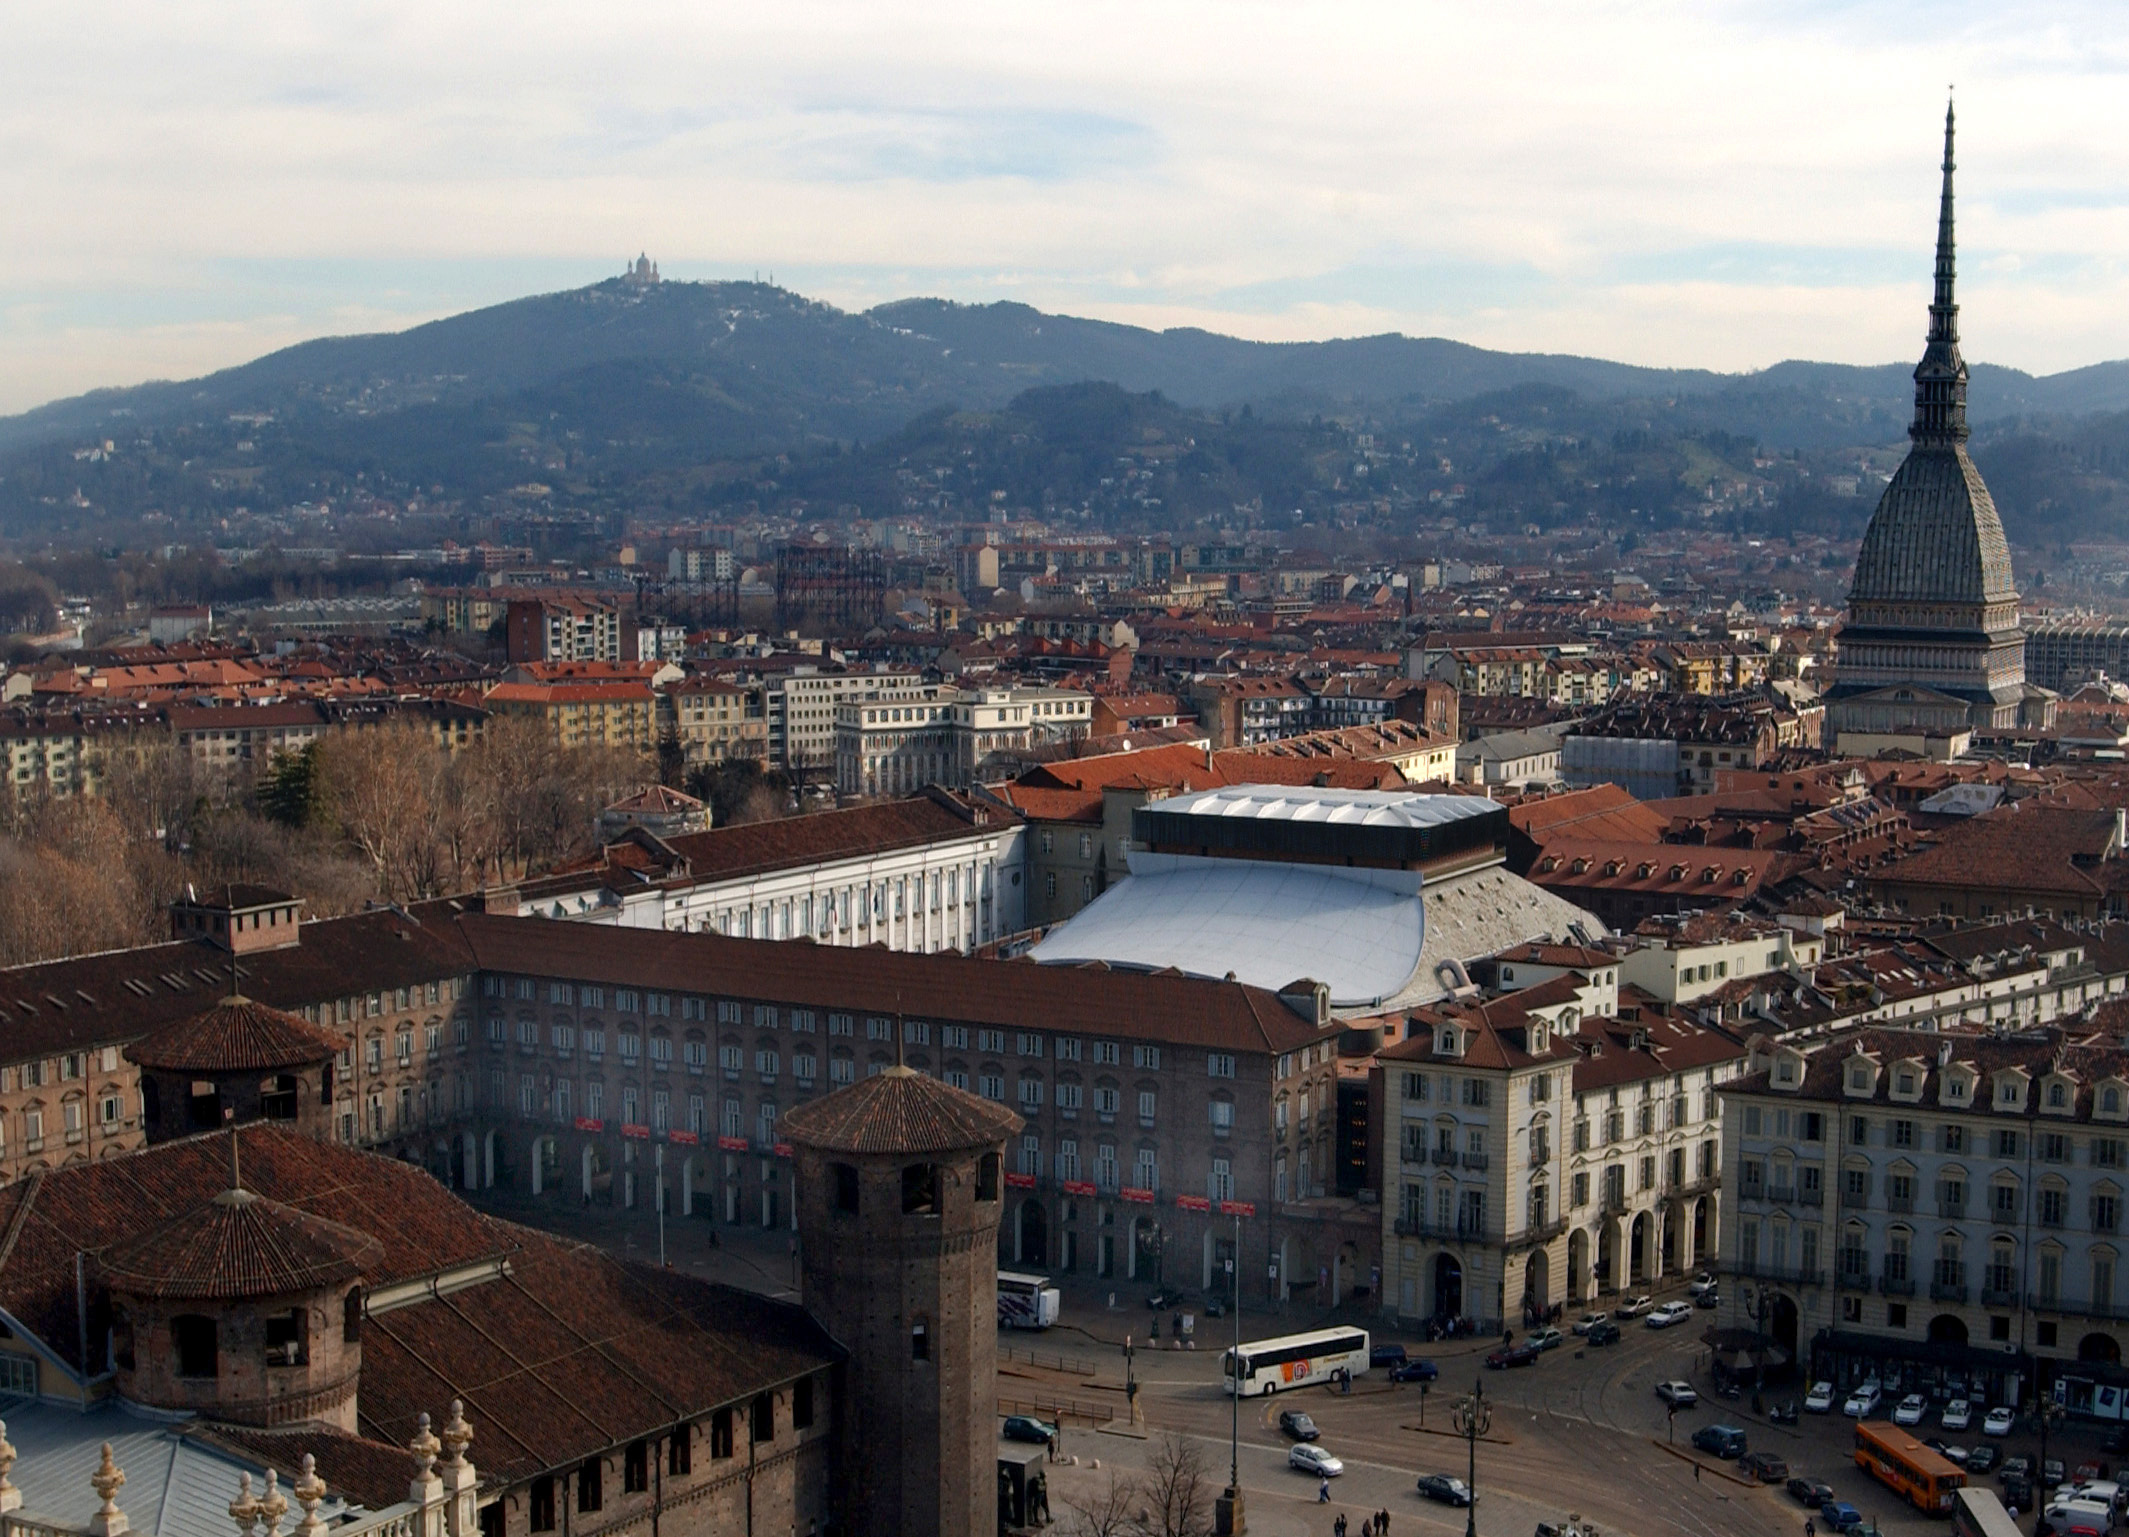 The architectural context of the theatre, facing Piazza Castello